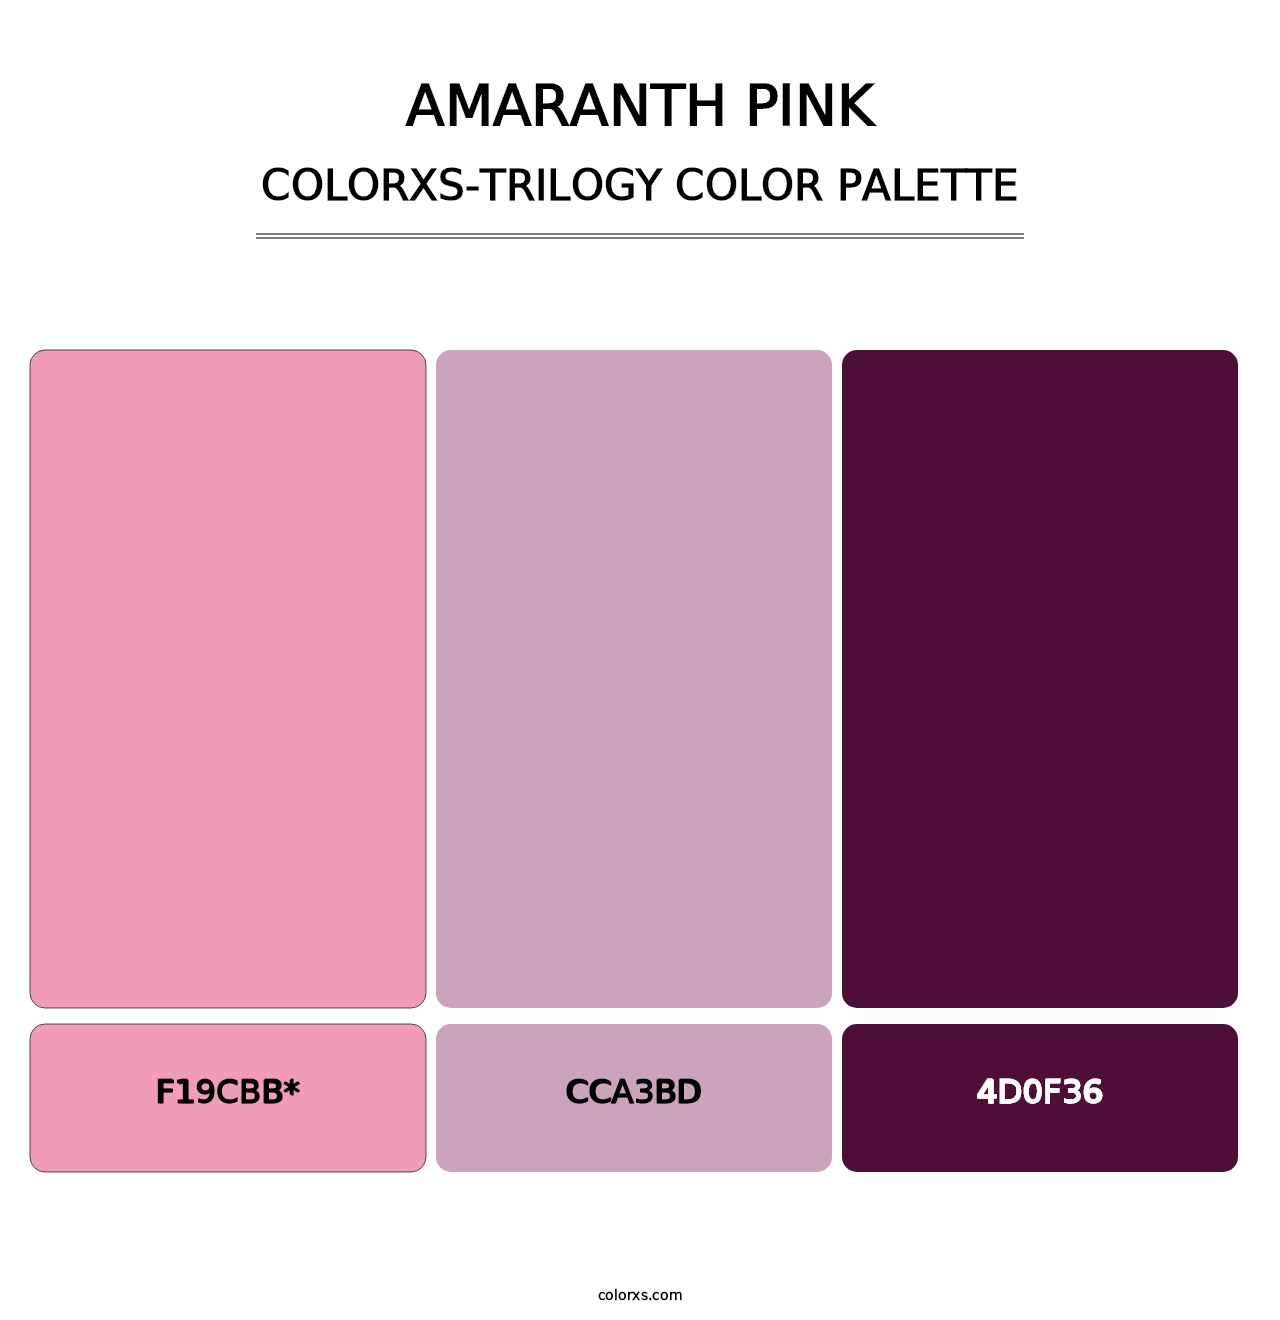 Amaranth Pink - Colorxs Trilogy Palette